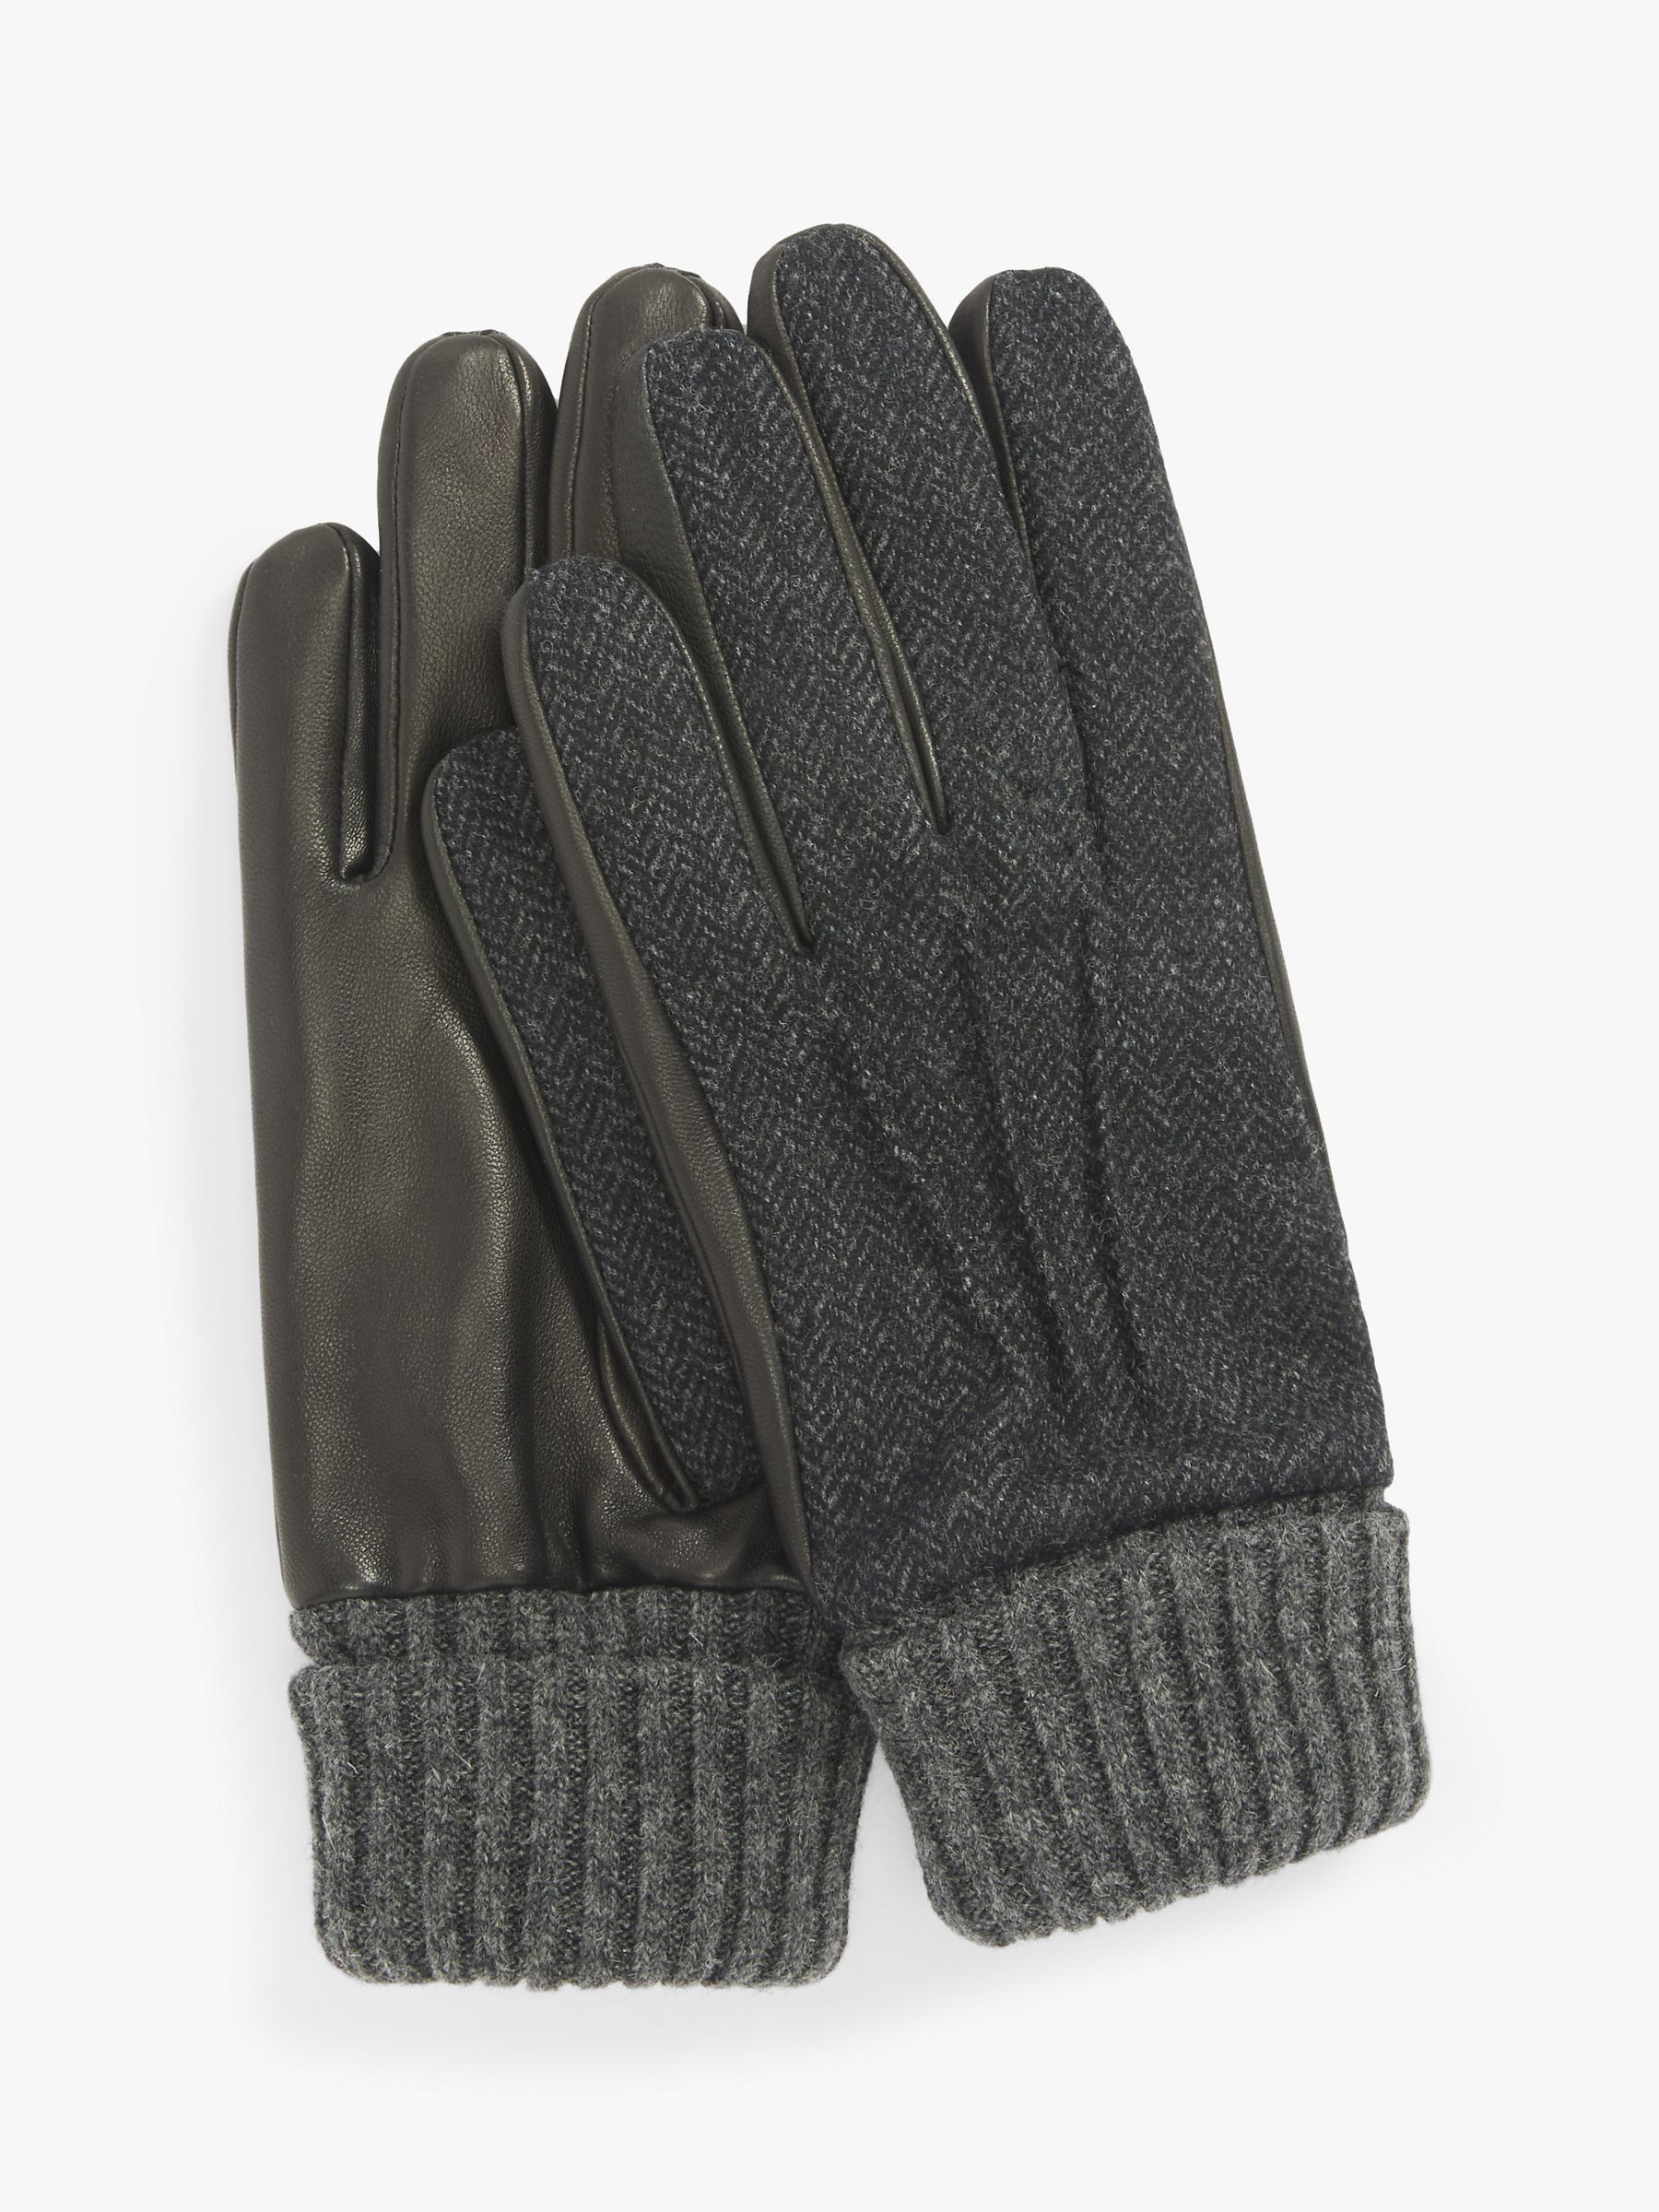 John Lewis Leather Palm Gloves, Grey, M